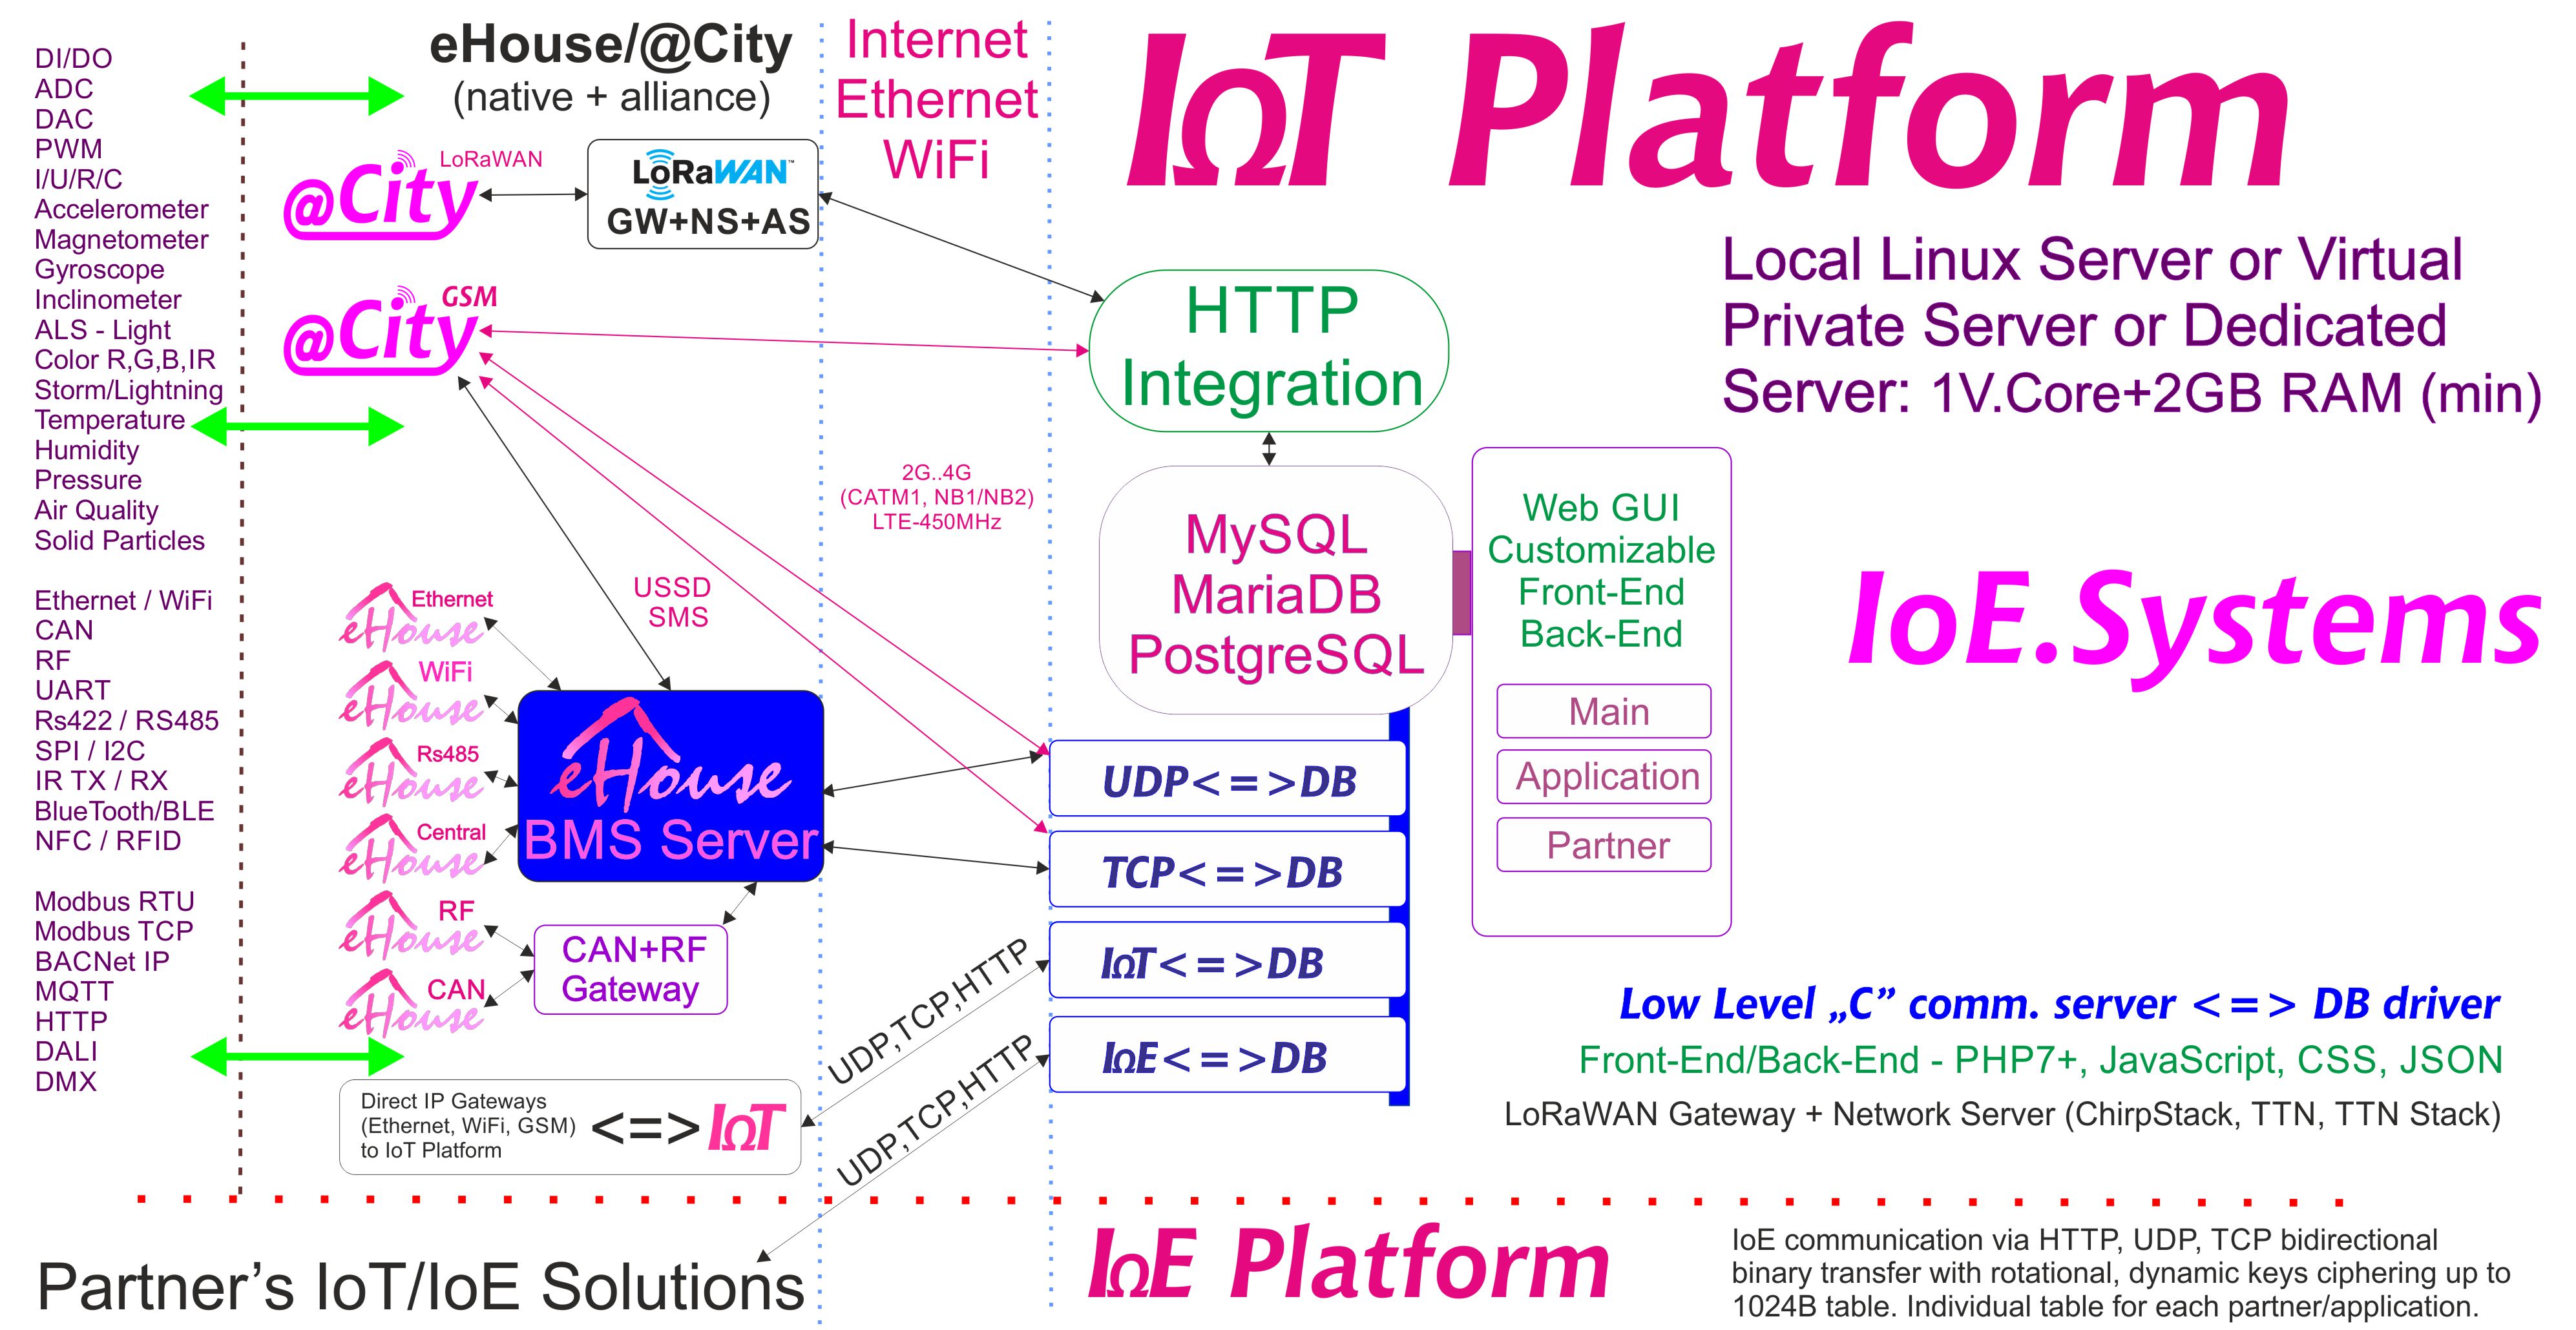 eHouse, eCity Server Software BAS, BMS, IoE, IoT Systems at Platform